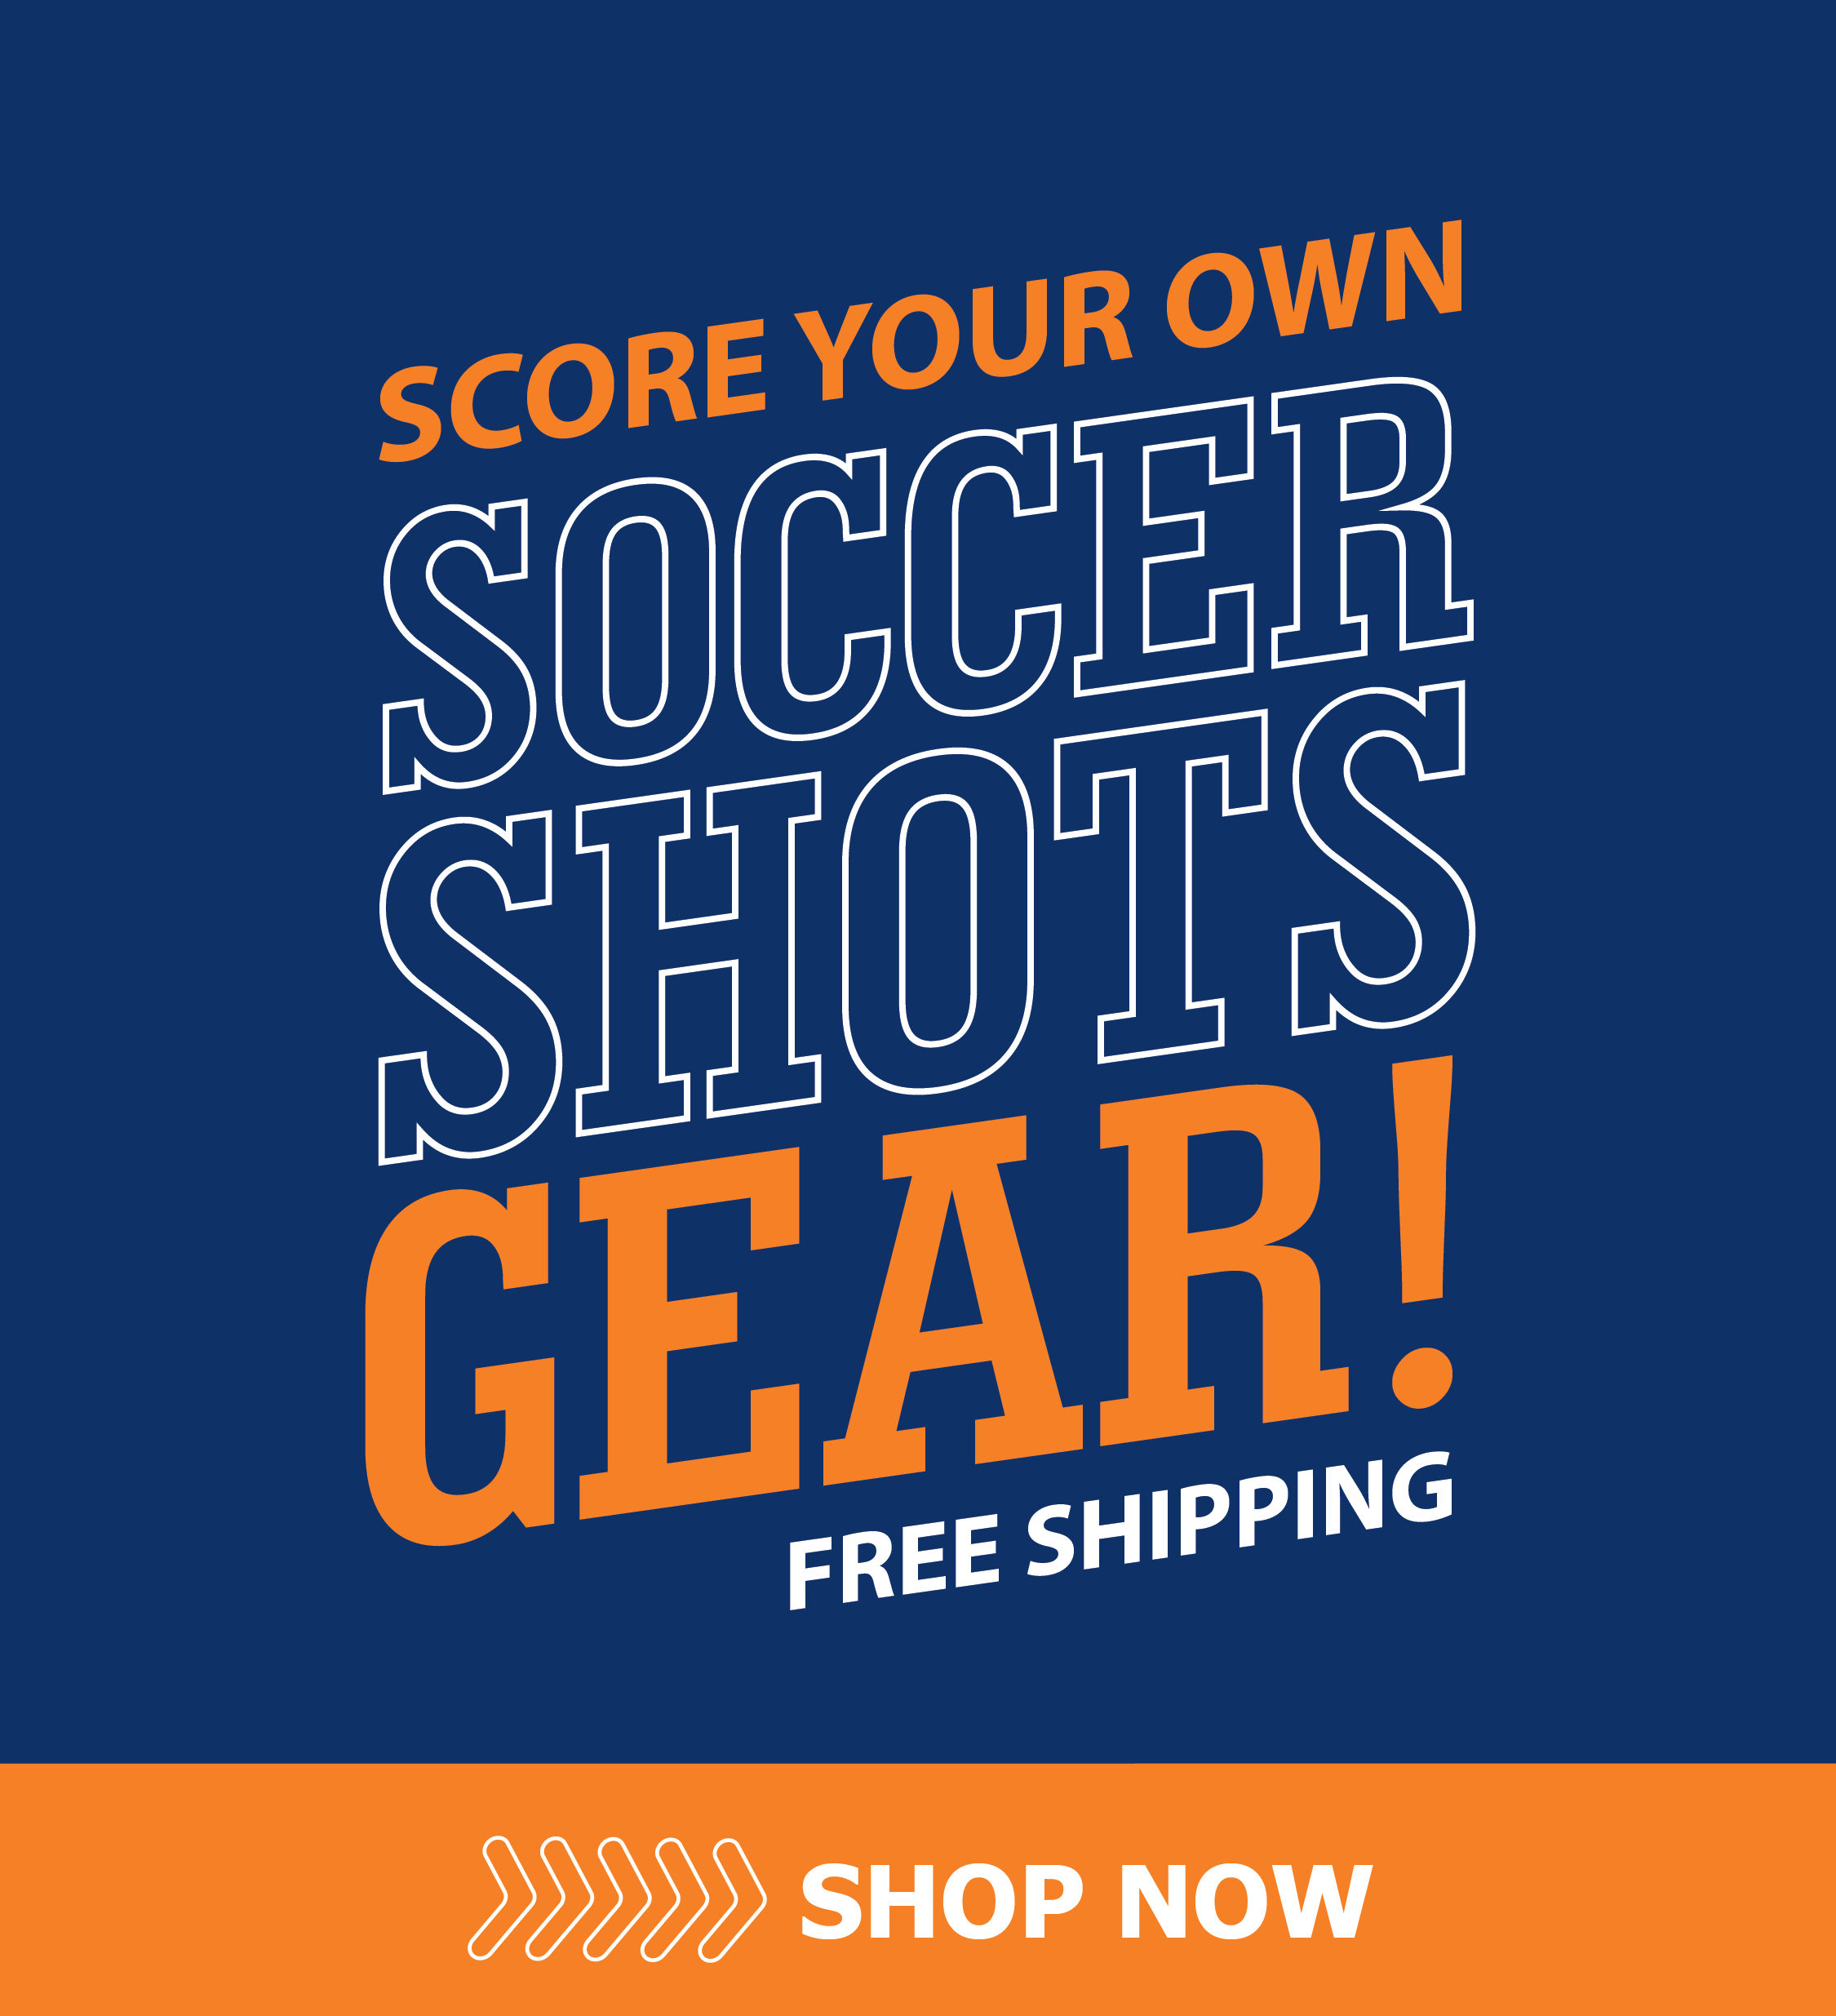 Soccer Shots Store